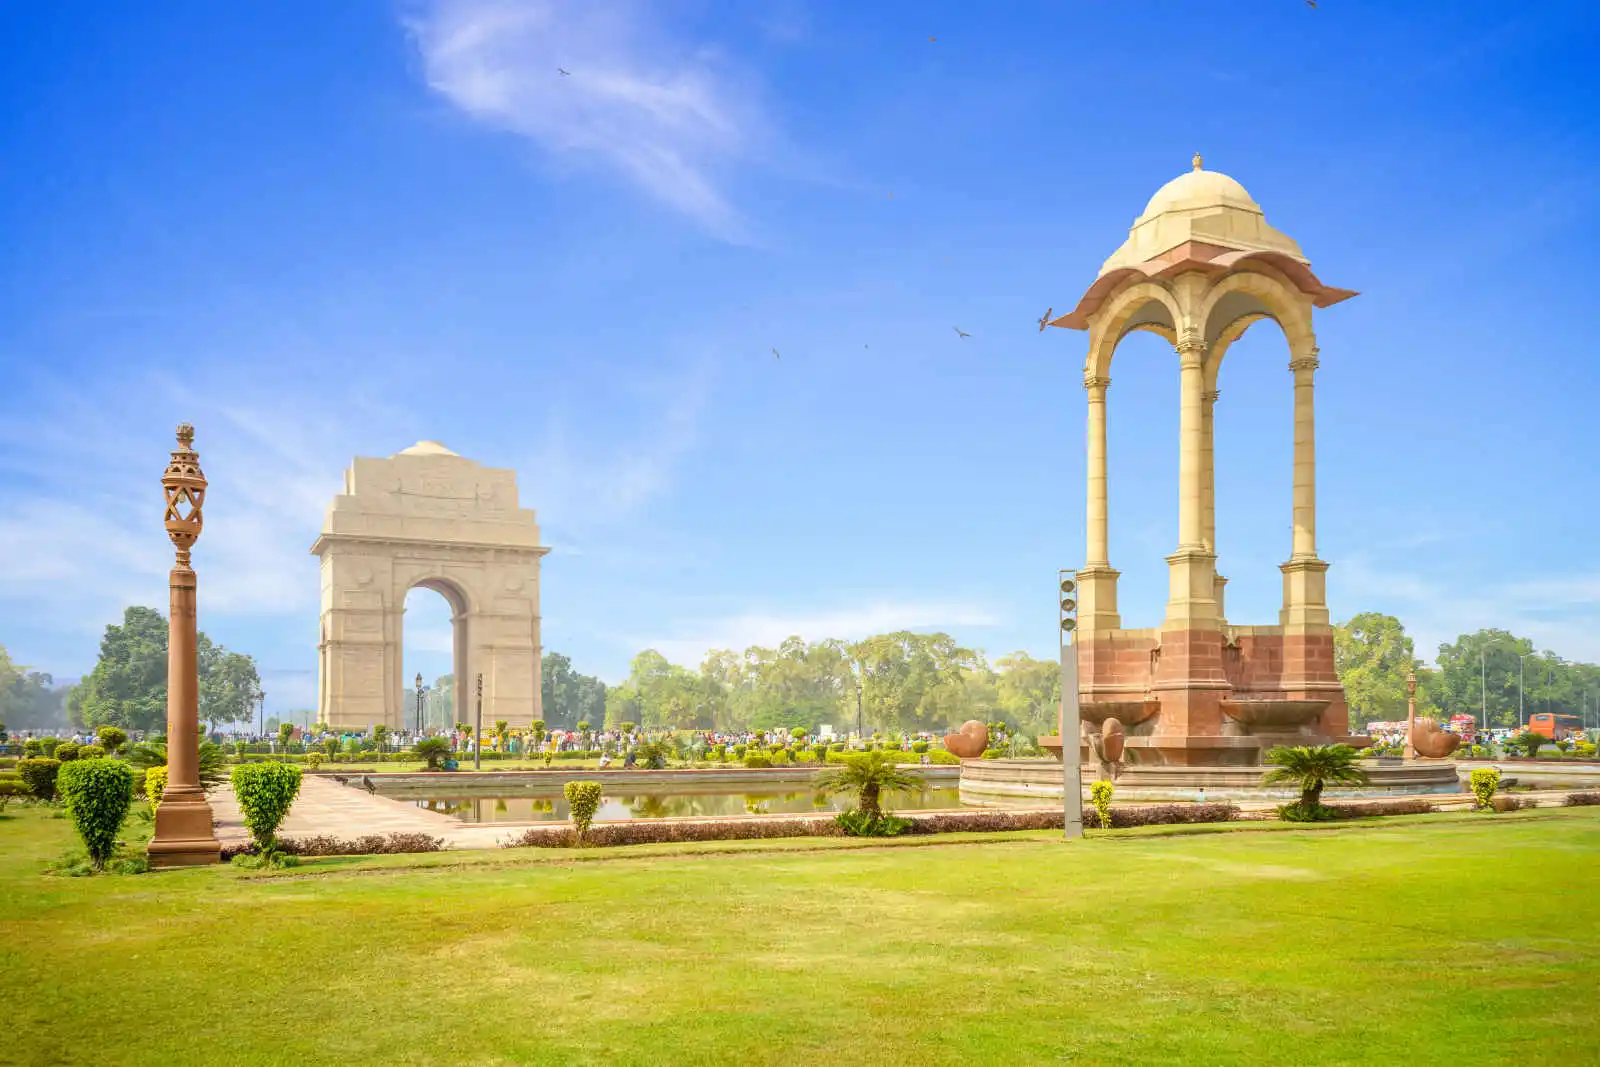 India Gate et la Canopée, Delhi, Inde